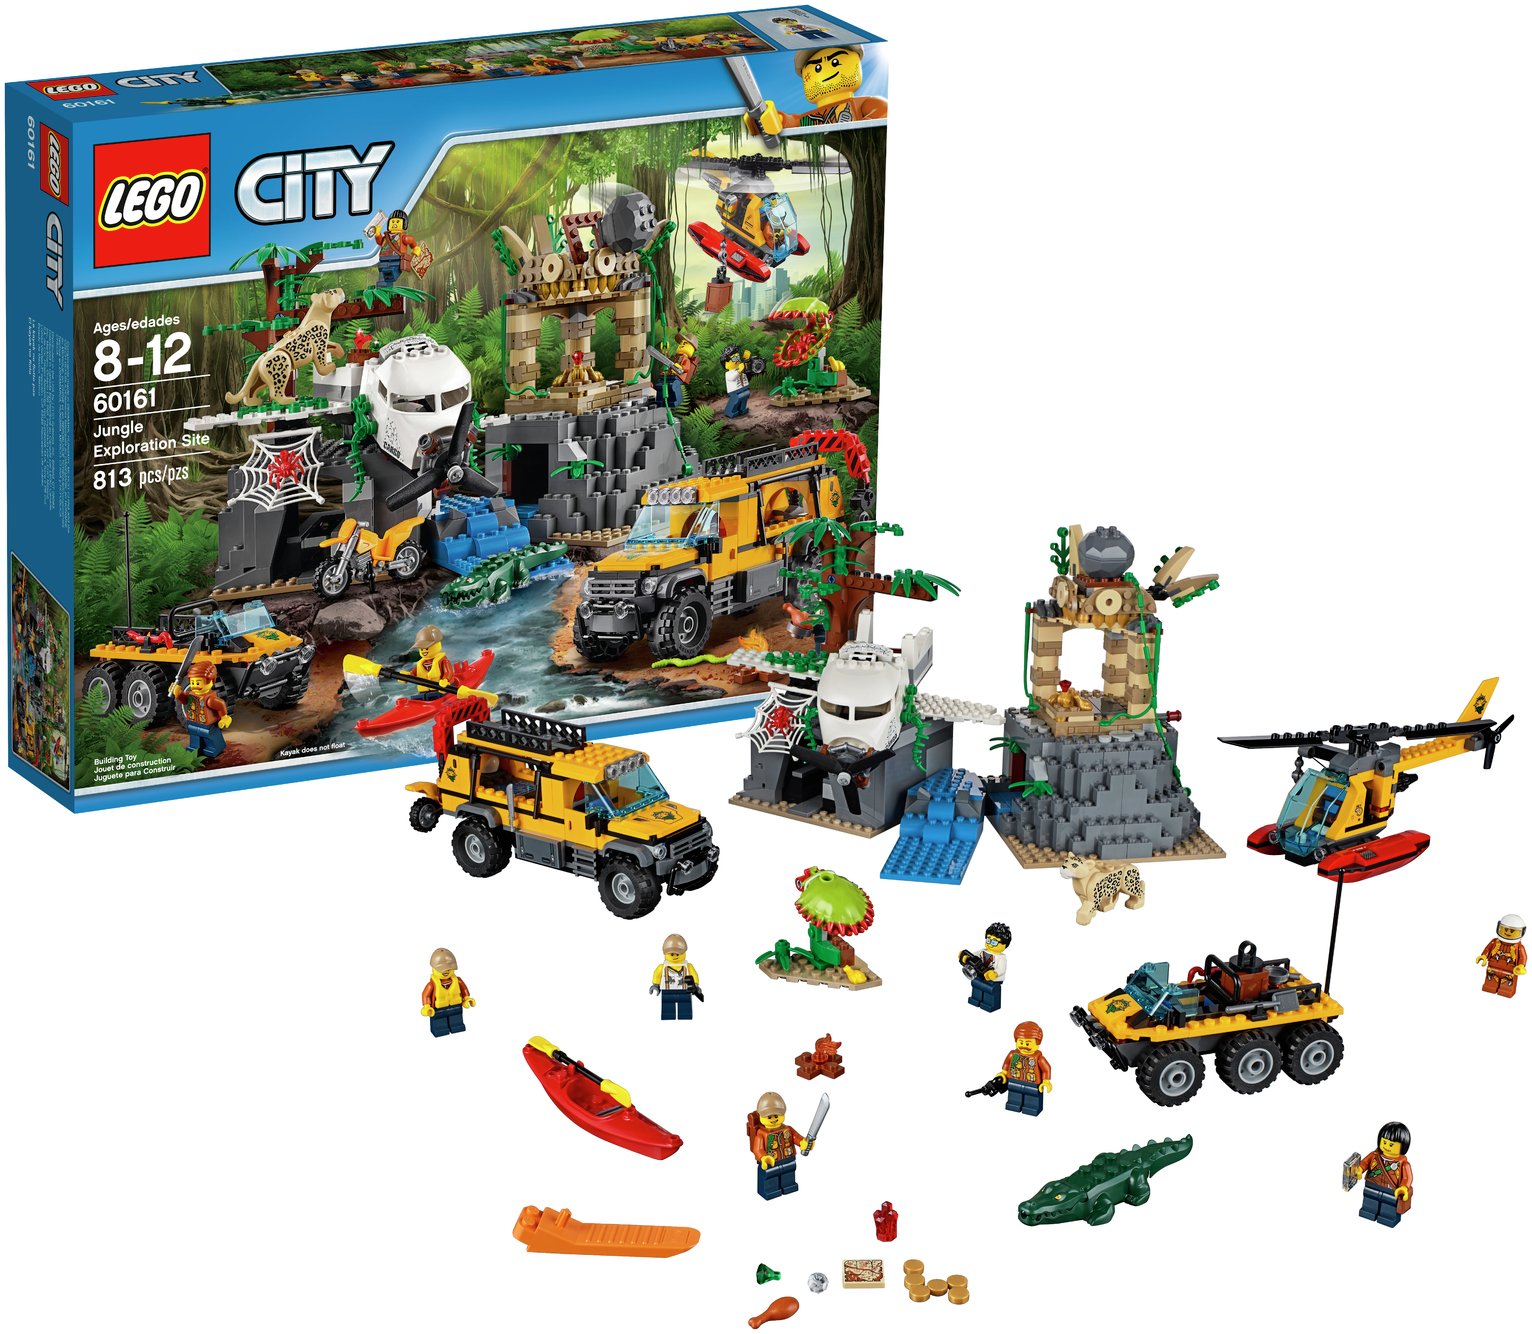 LEGO City Jungle Exploration Site - 60161